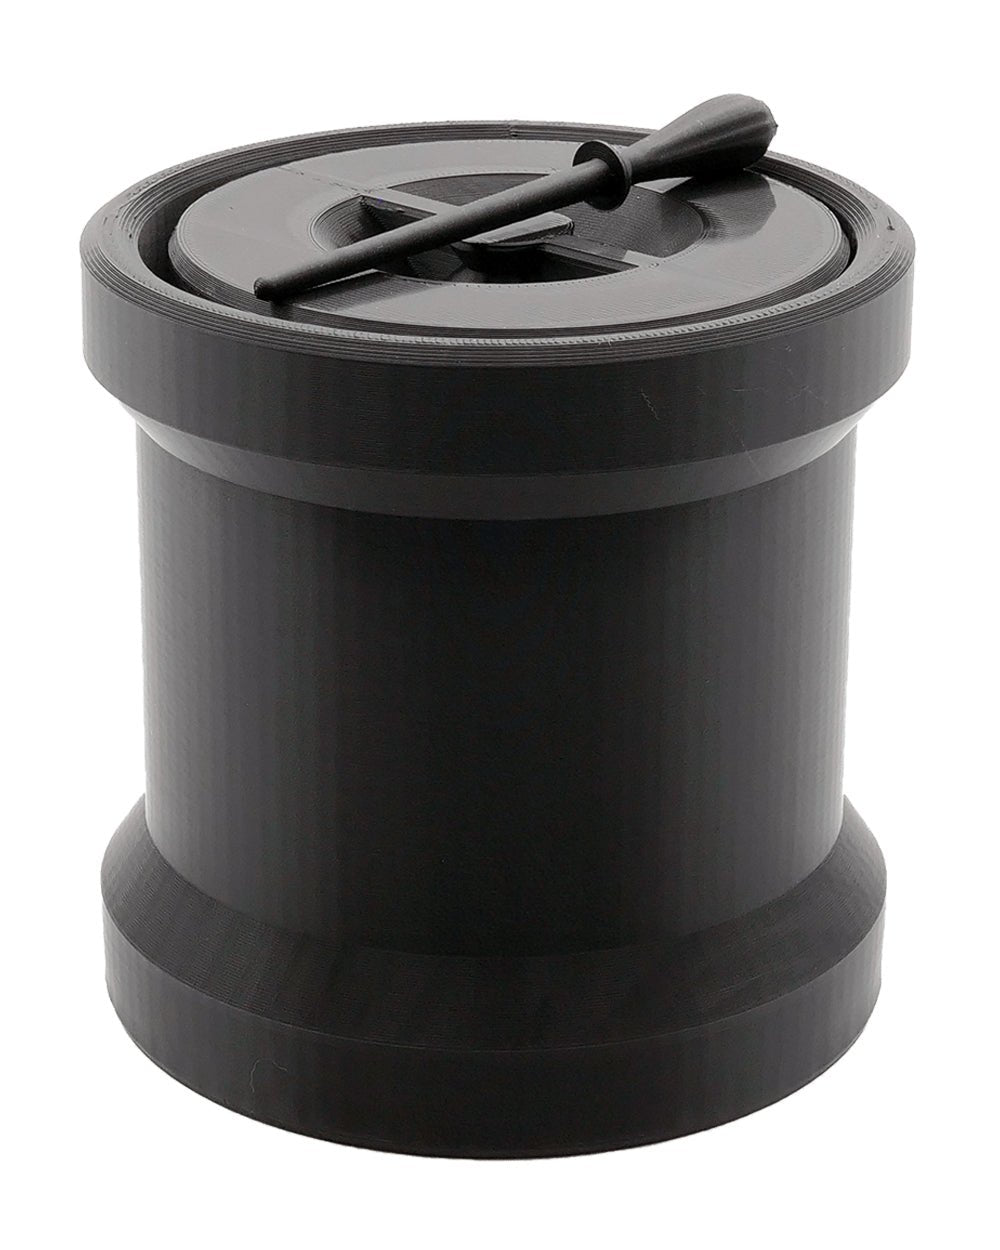 HUMBOLDT | Black Pre-Rolled Cones Filling Machine Cartridge 109mm | Fill 55 Cones Per Run - 2